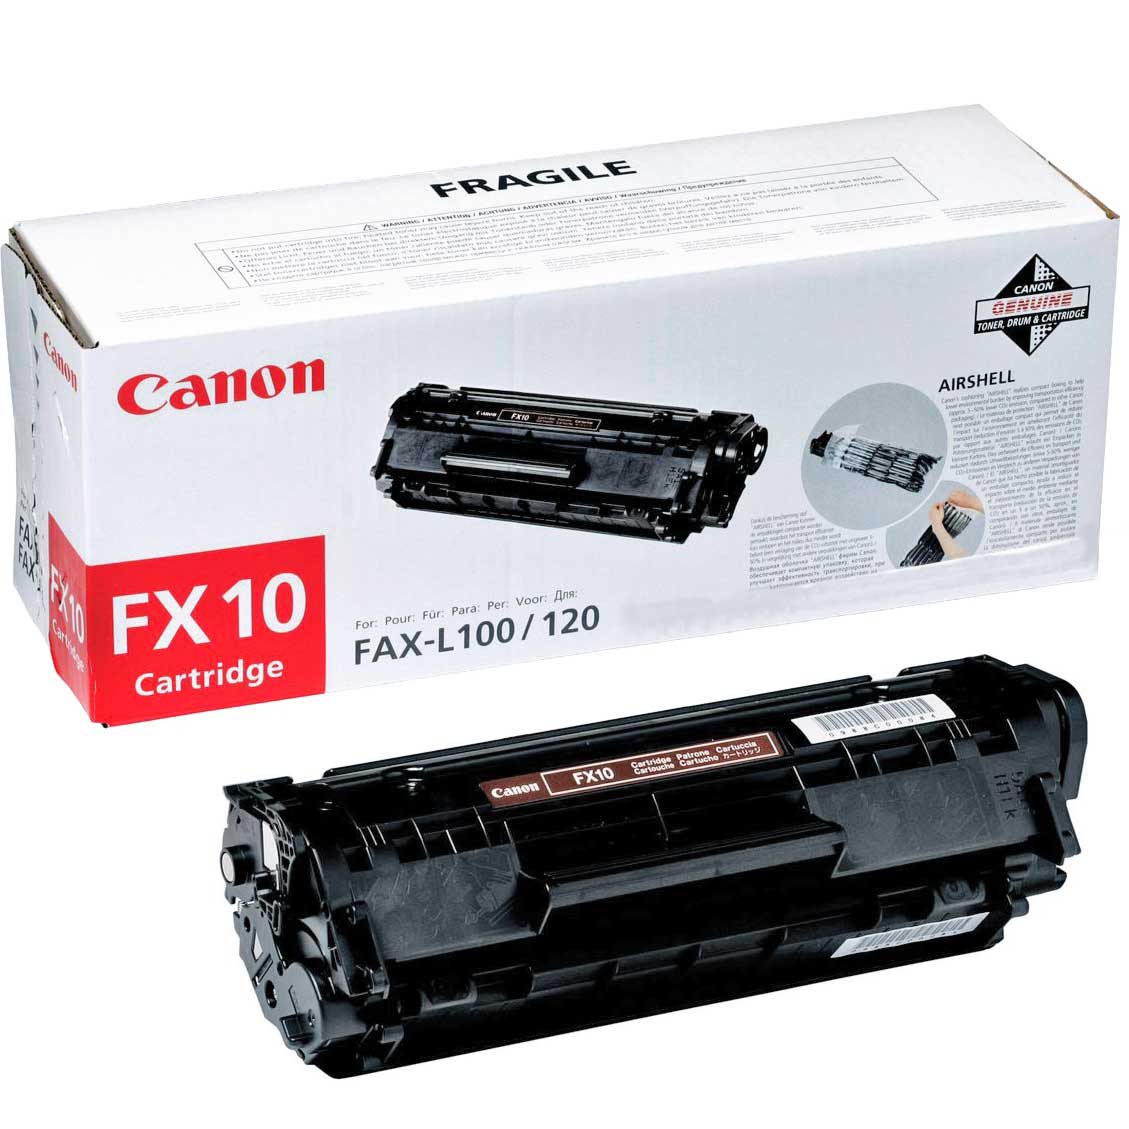 Картриджи Canon FX10 для Canon i-Sensys MF4018 Купить комплект картриджей.